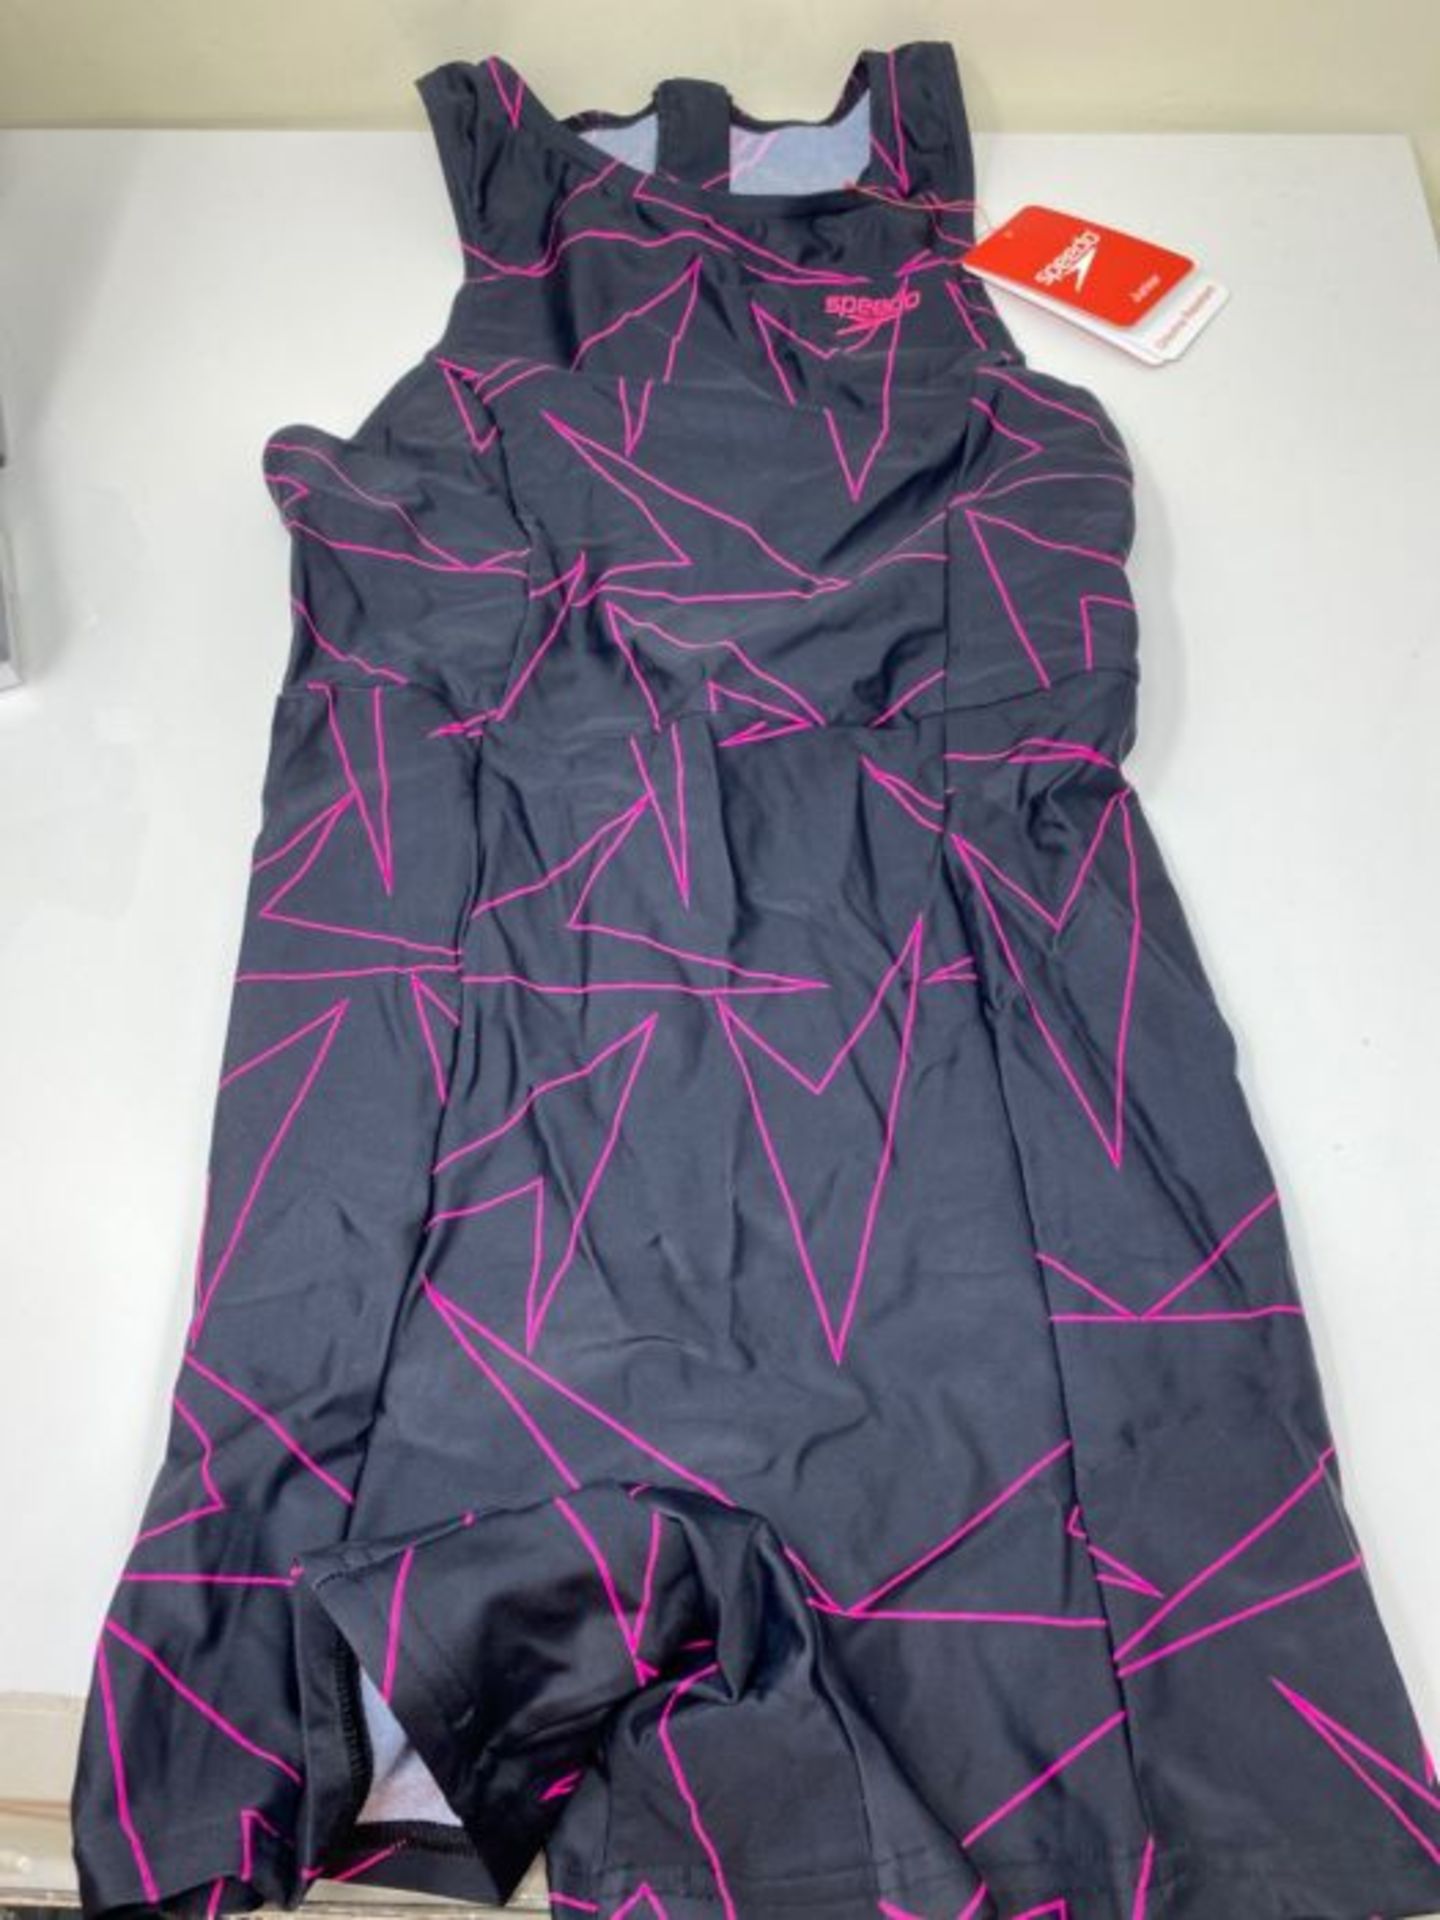 Speedo Girls' Boomstar Allover Legsuit, Black/Electric Pink, 32 (13-14 YRS) - Image 2 of 2